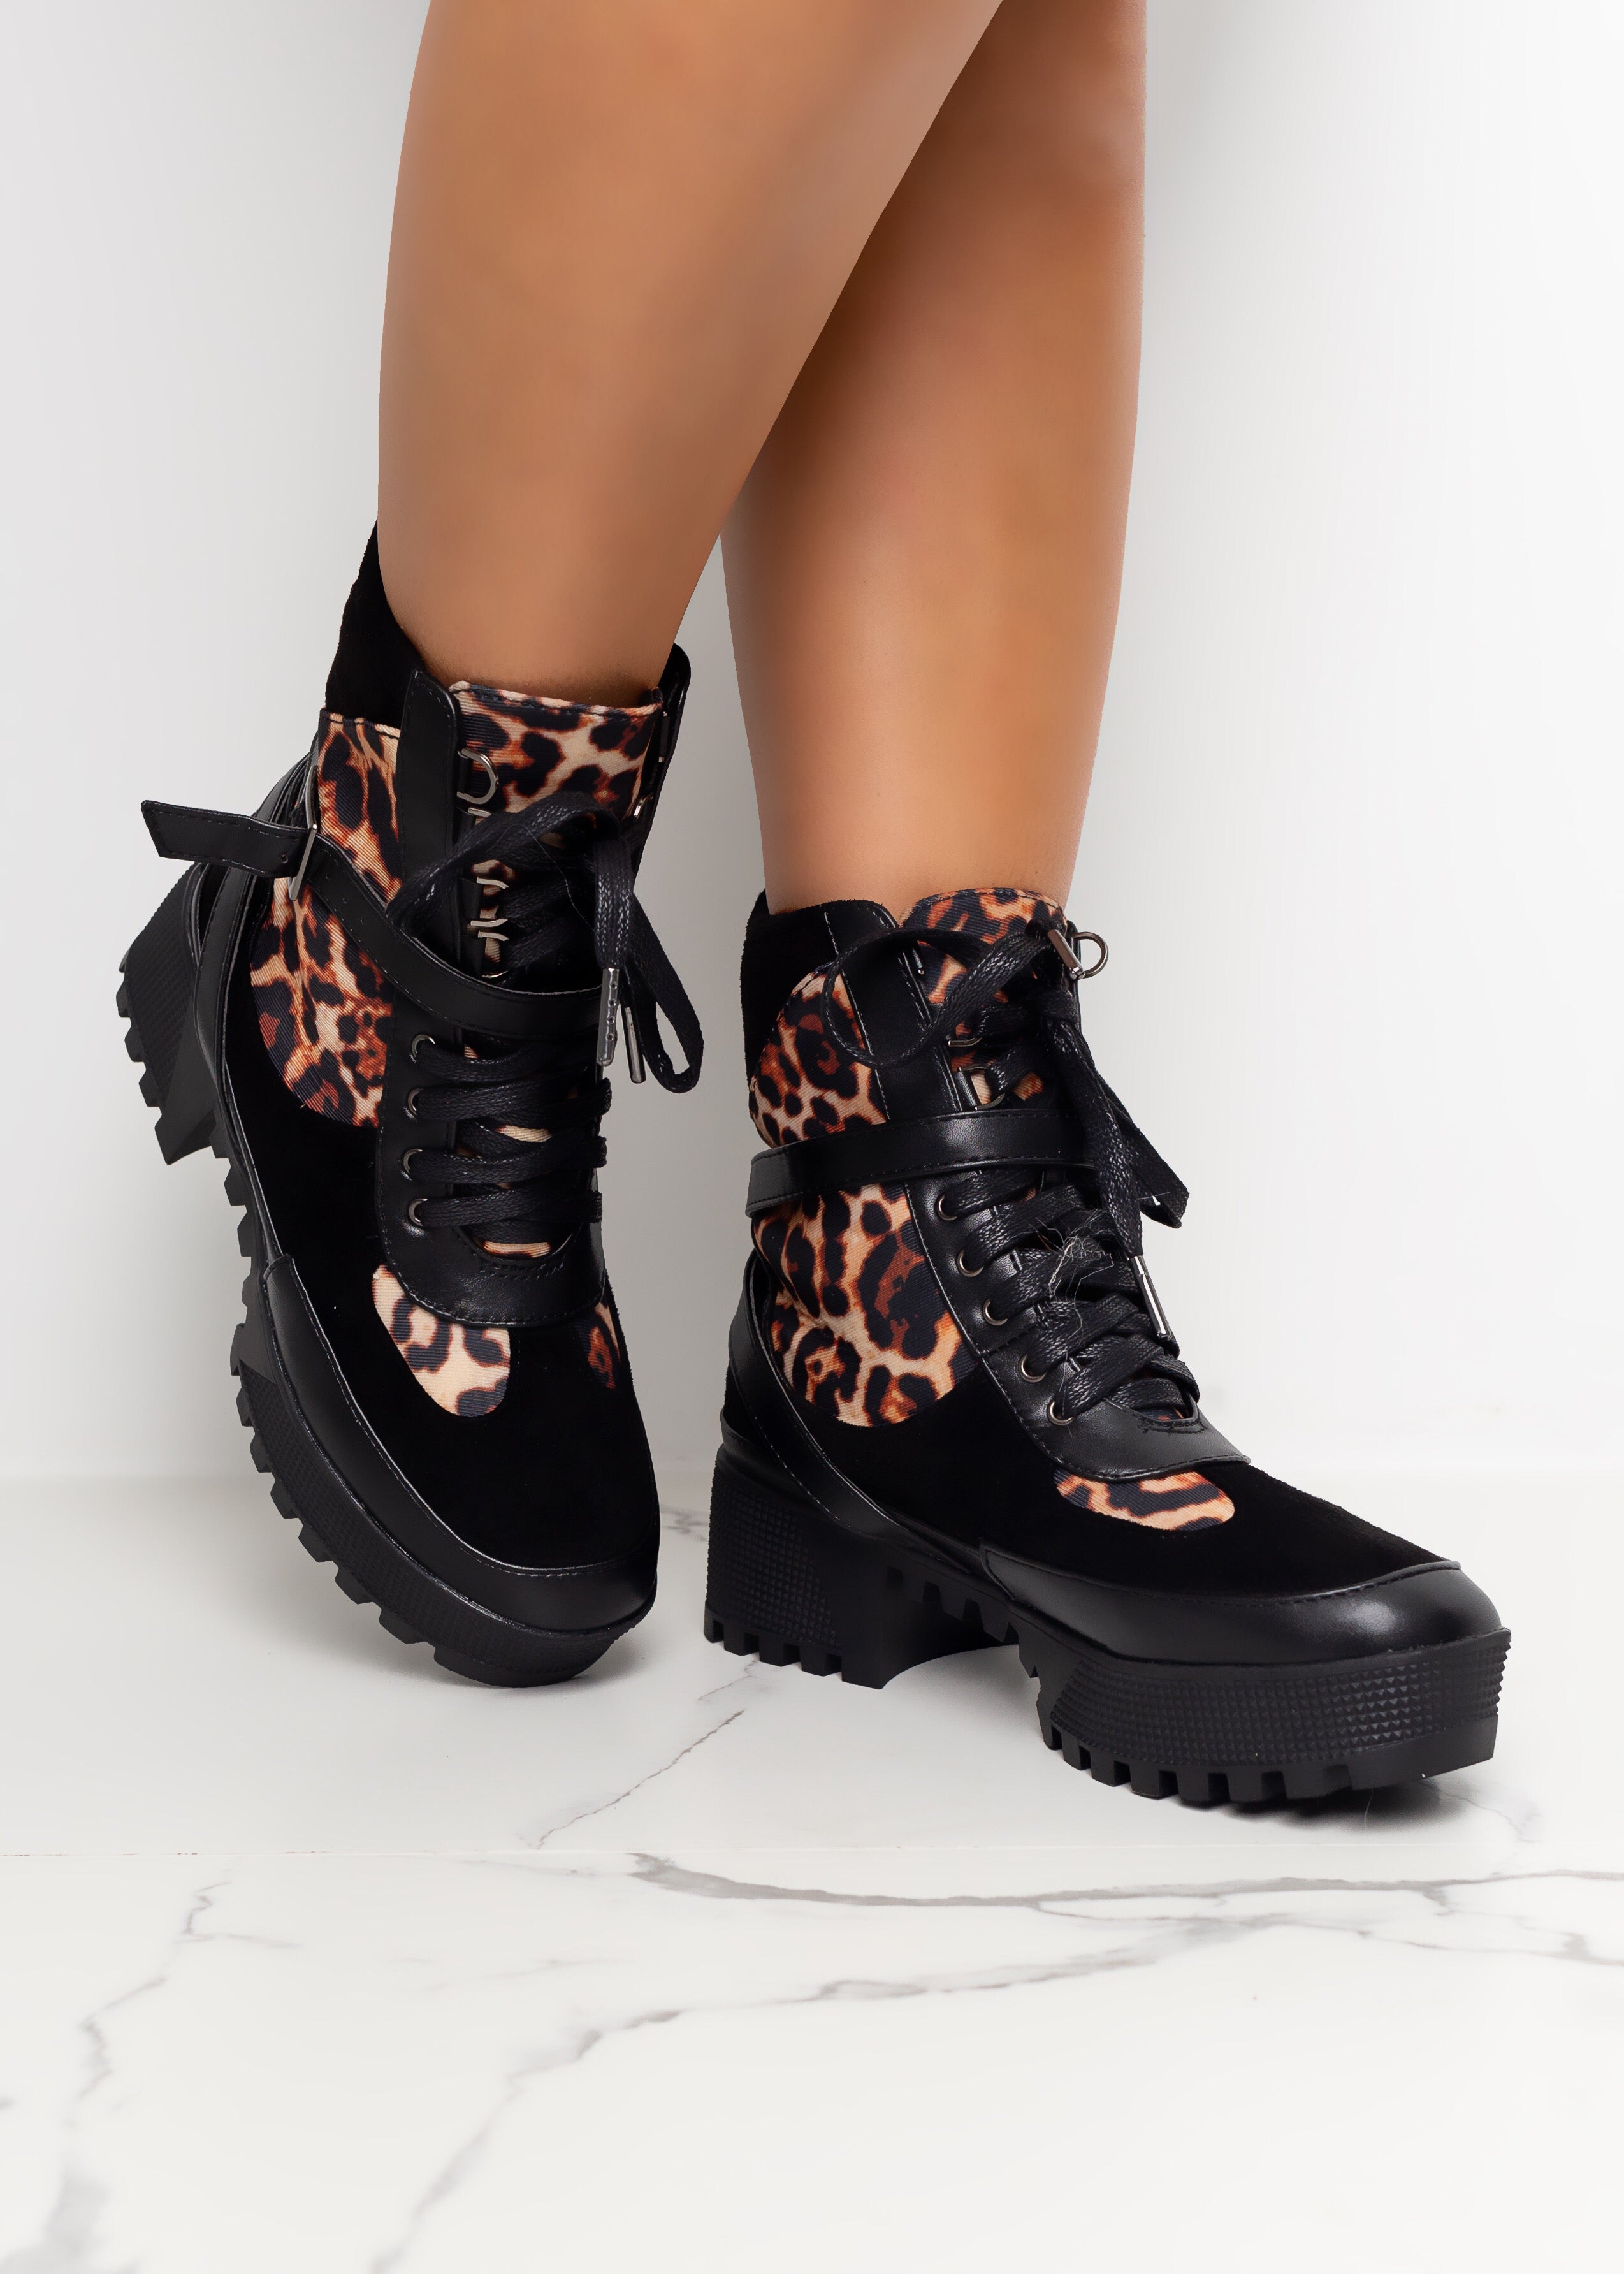 warrior boots